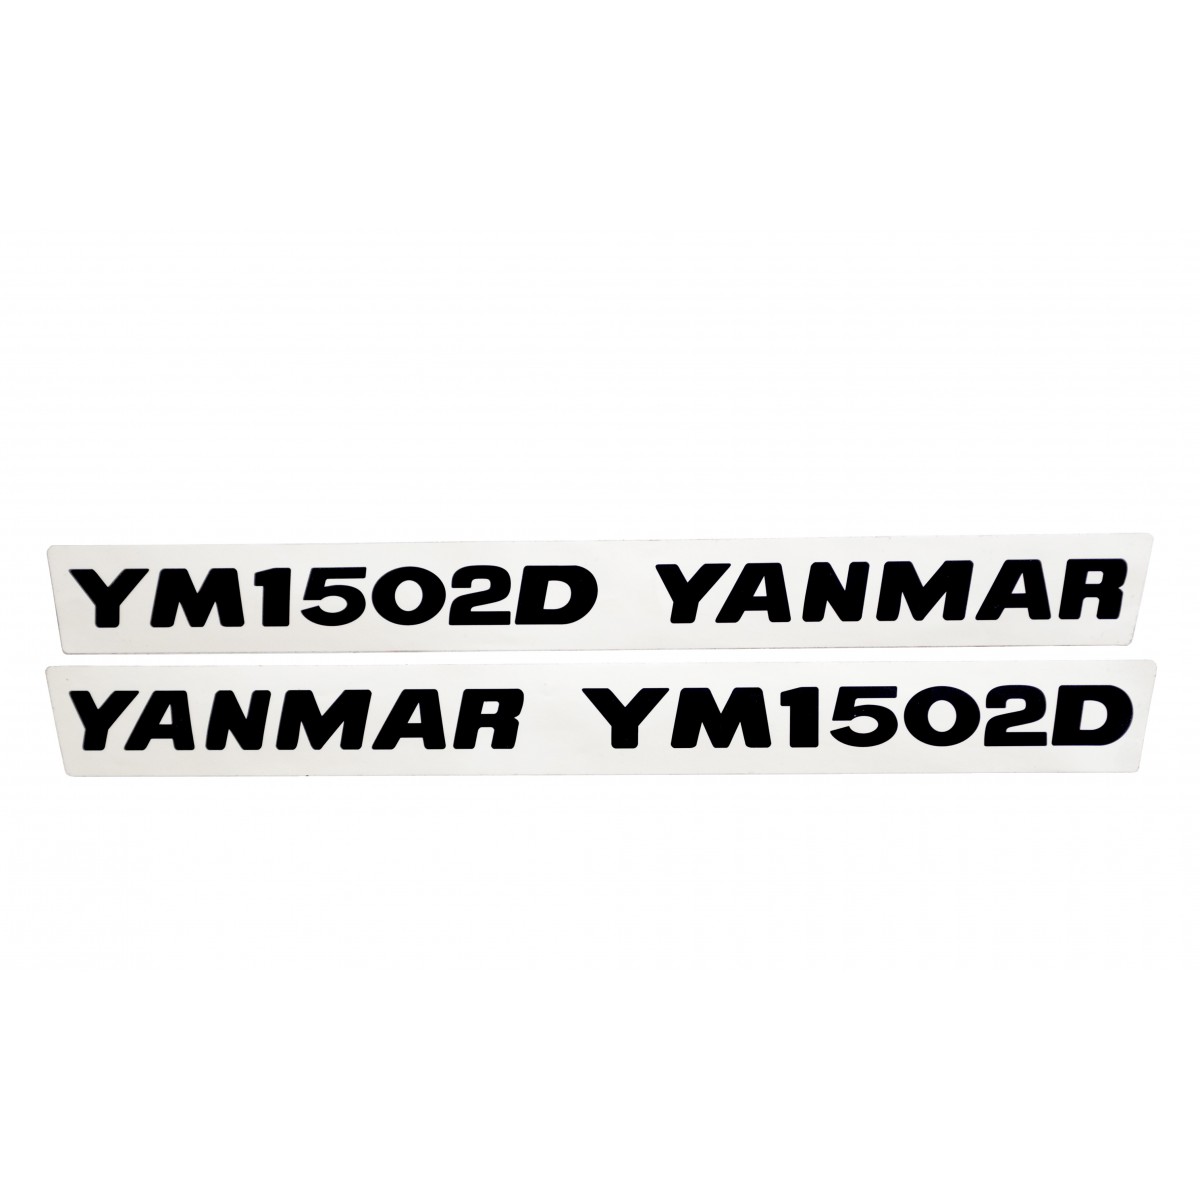 Stickers (2 pcs) Yanmar YM1502D